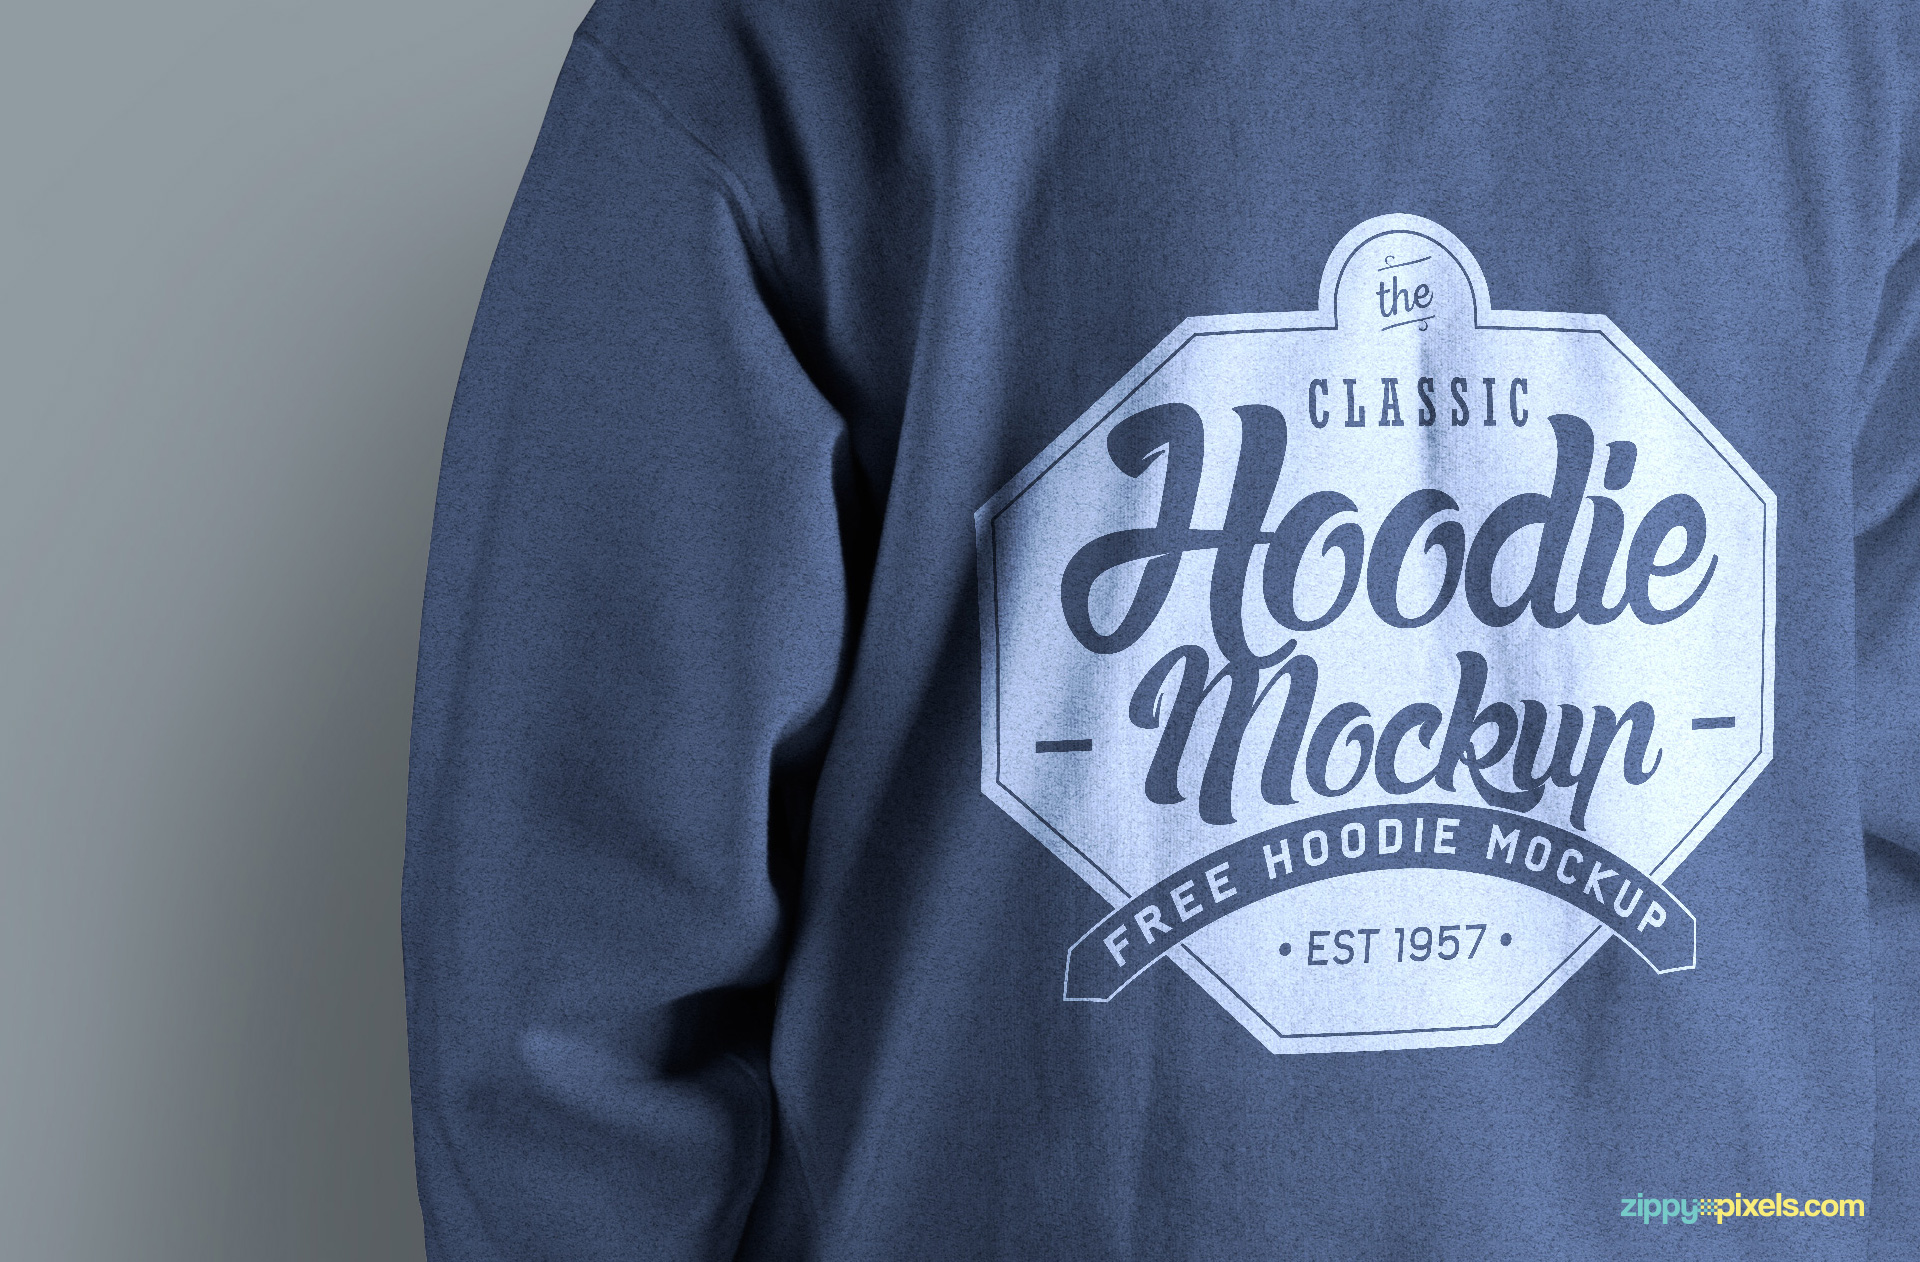 Photorealistic hoodie mockup for designers